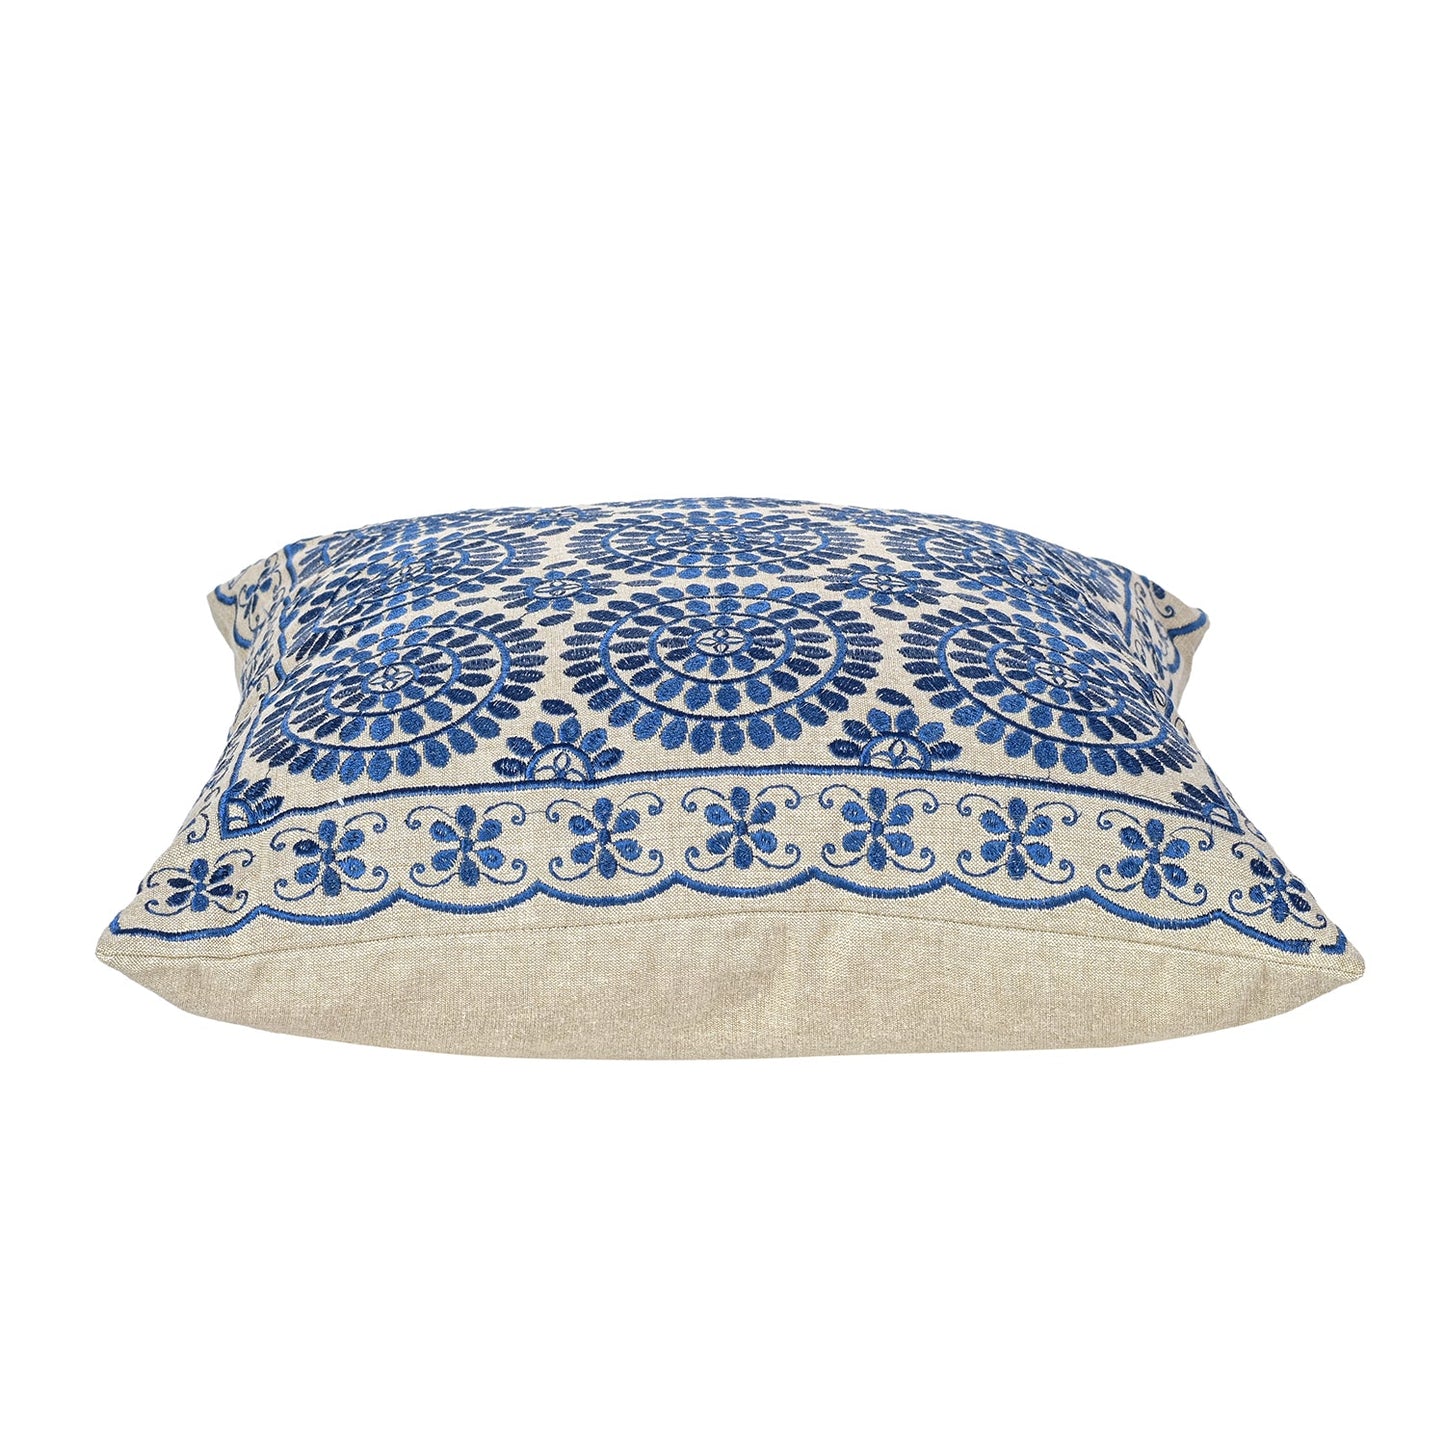 Blue Geometric Jaipur Throw Pillow Cover - I